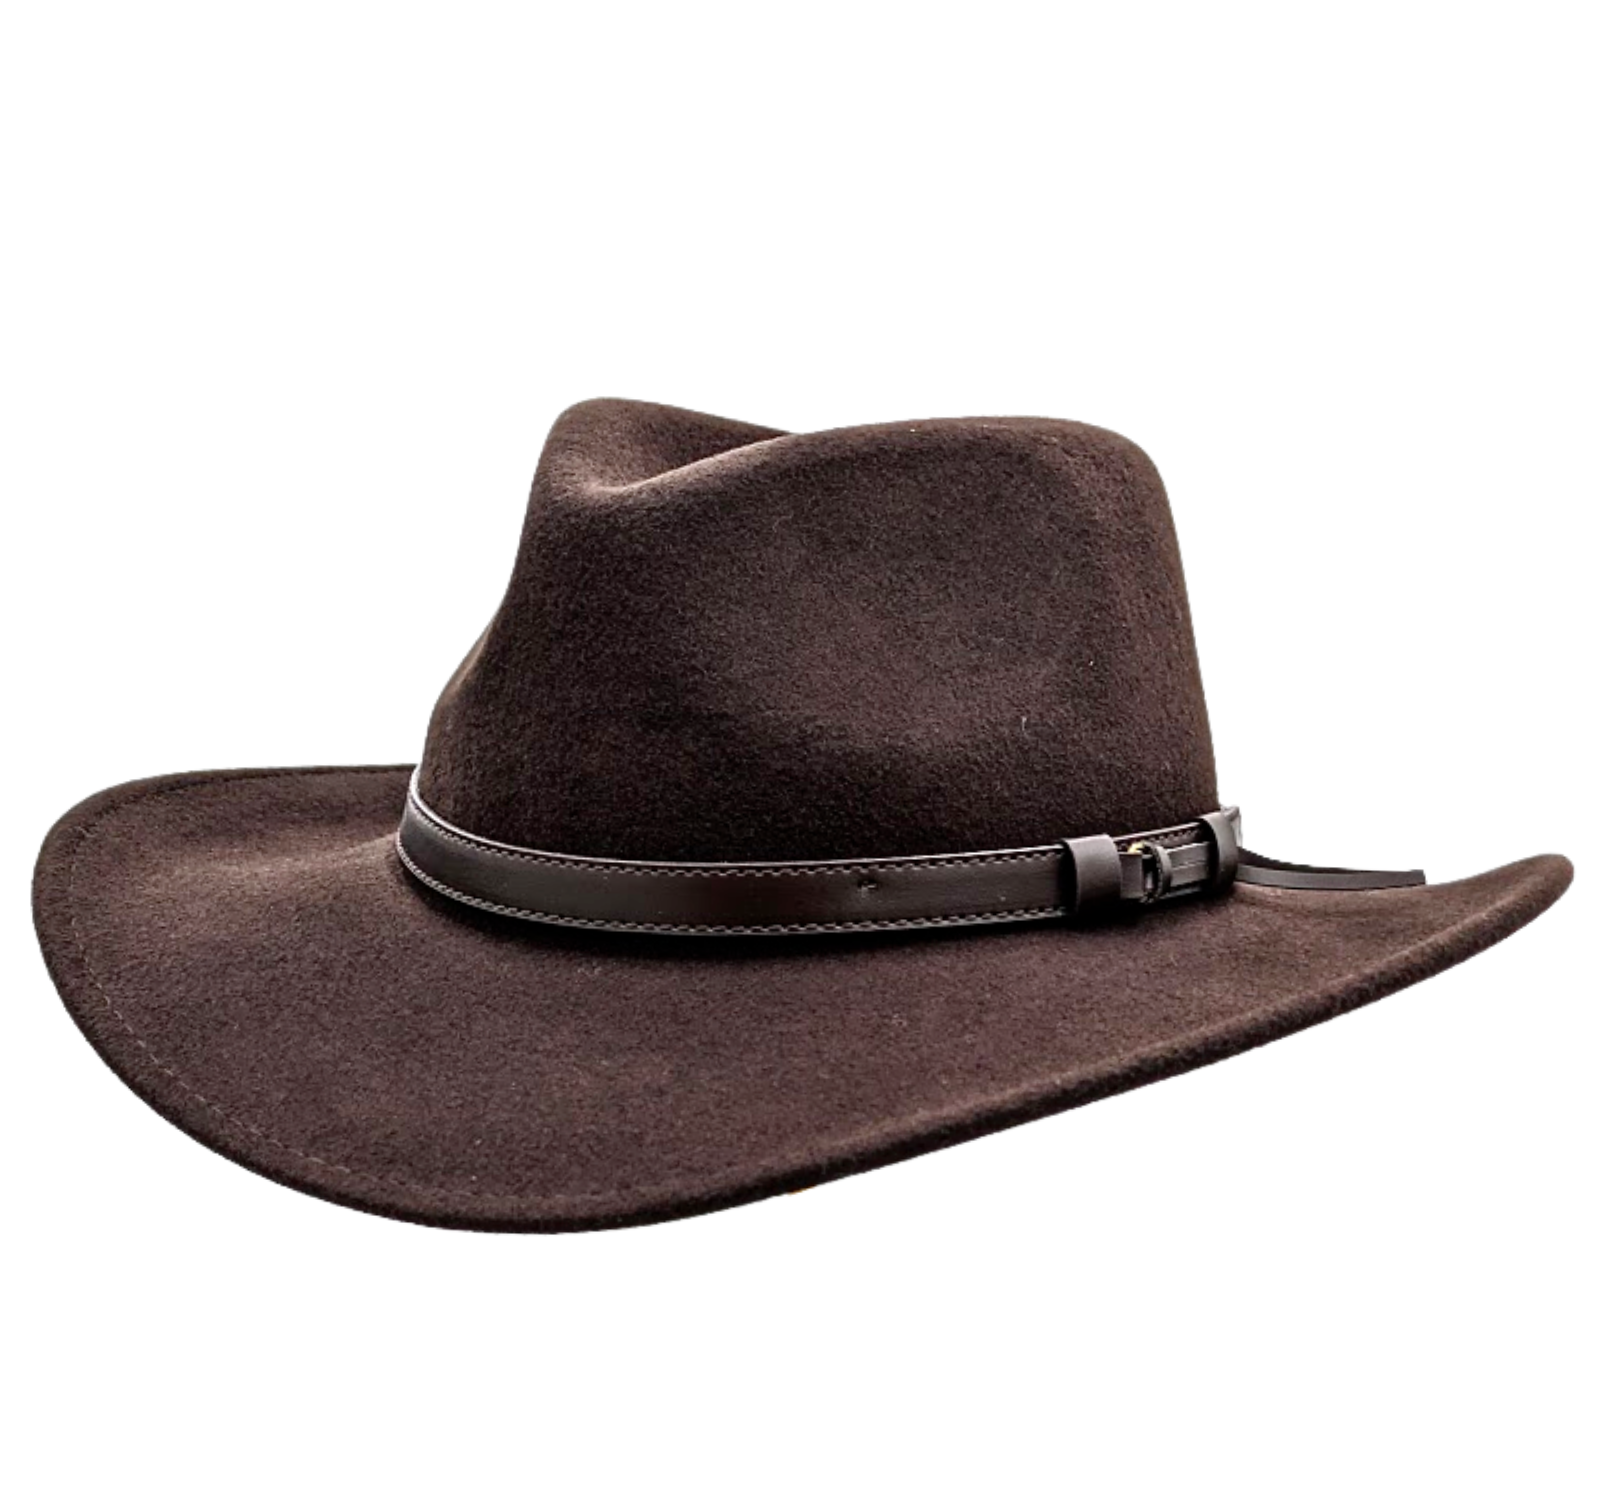 Stansmore Cowboy Hat